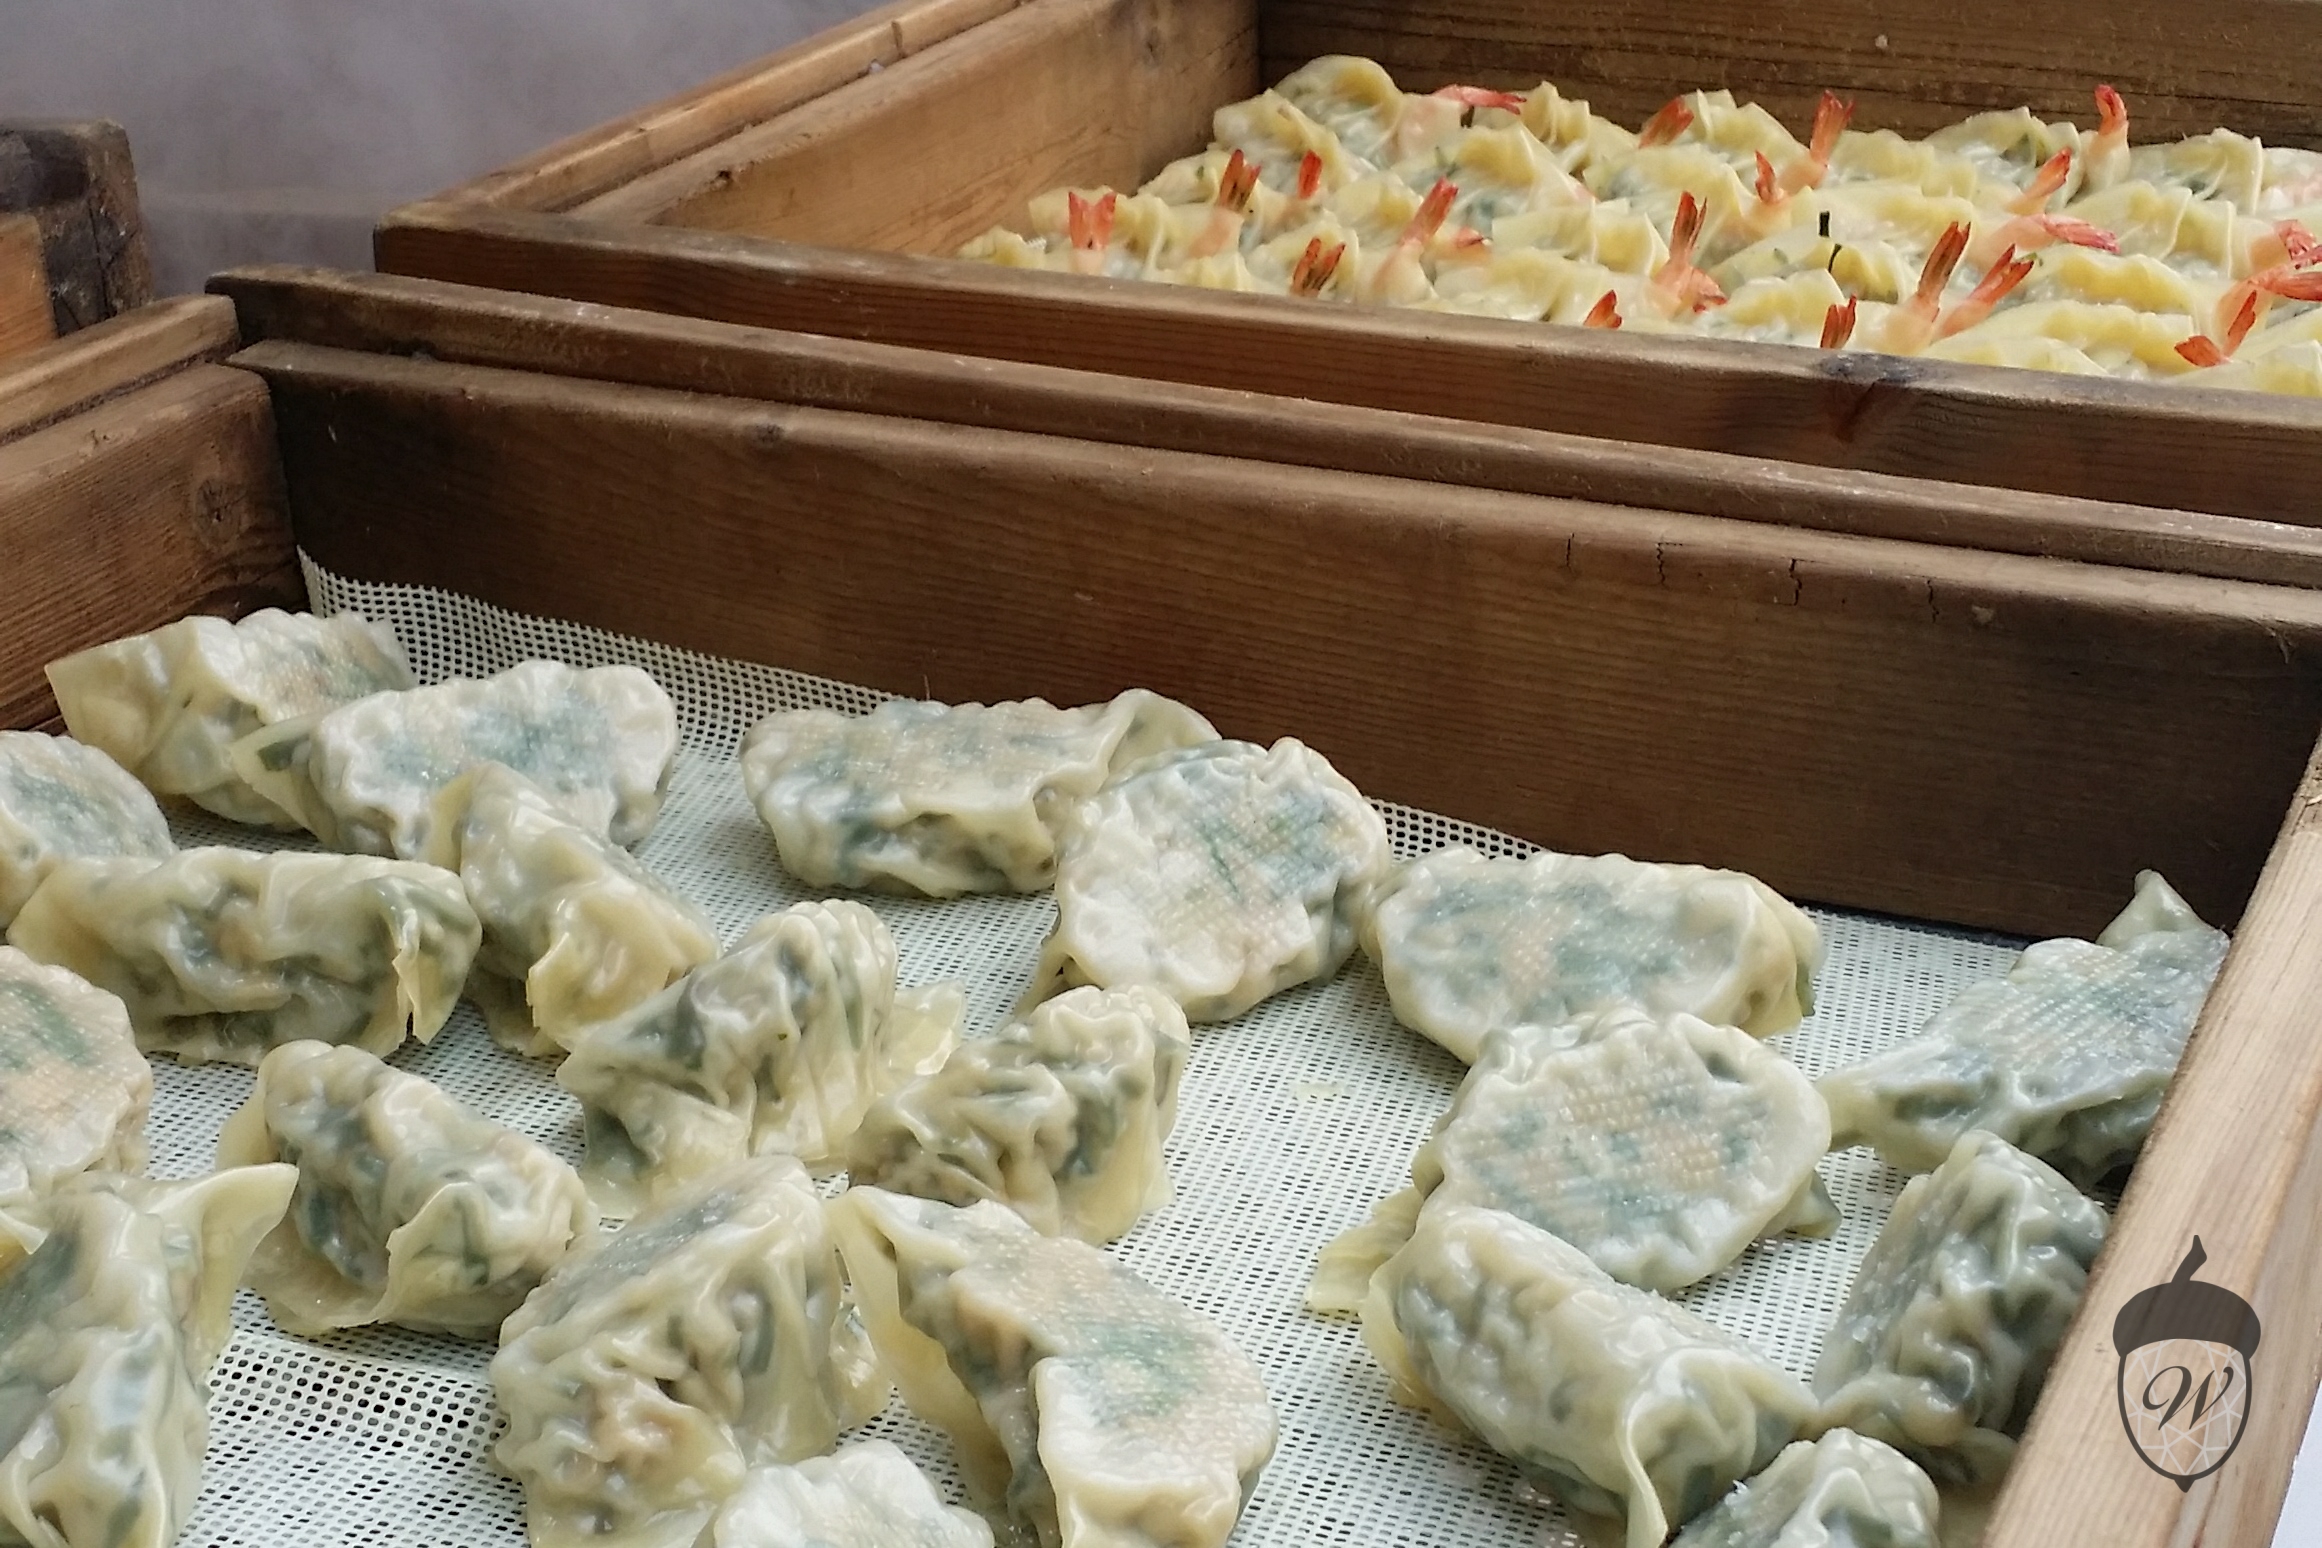 Yummy quick eats – How to find dumplings in Korea